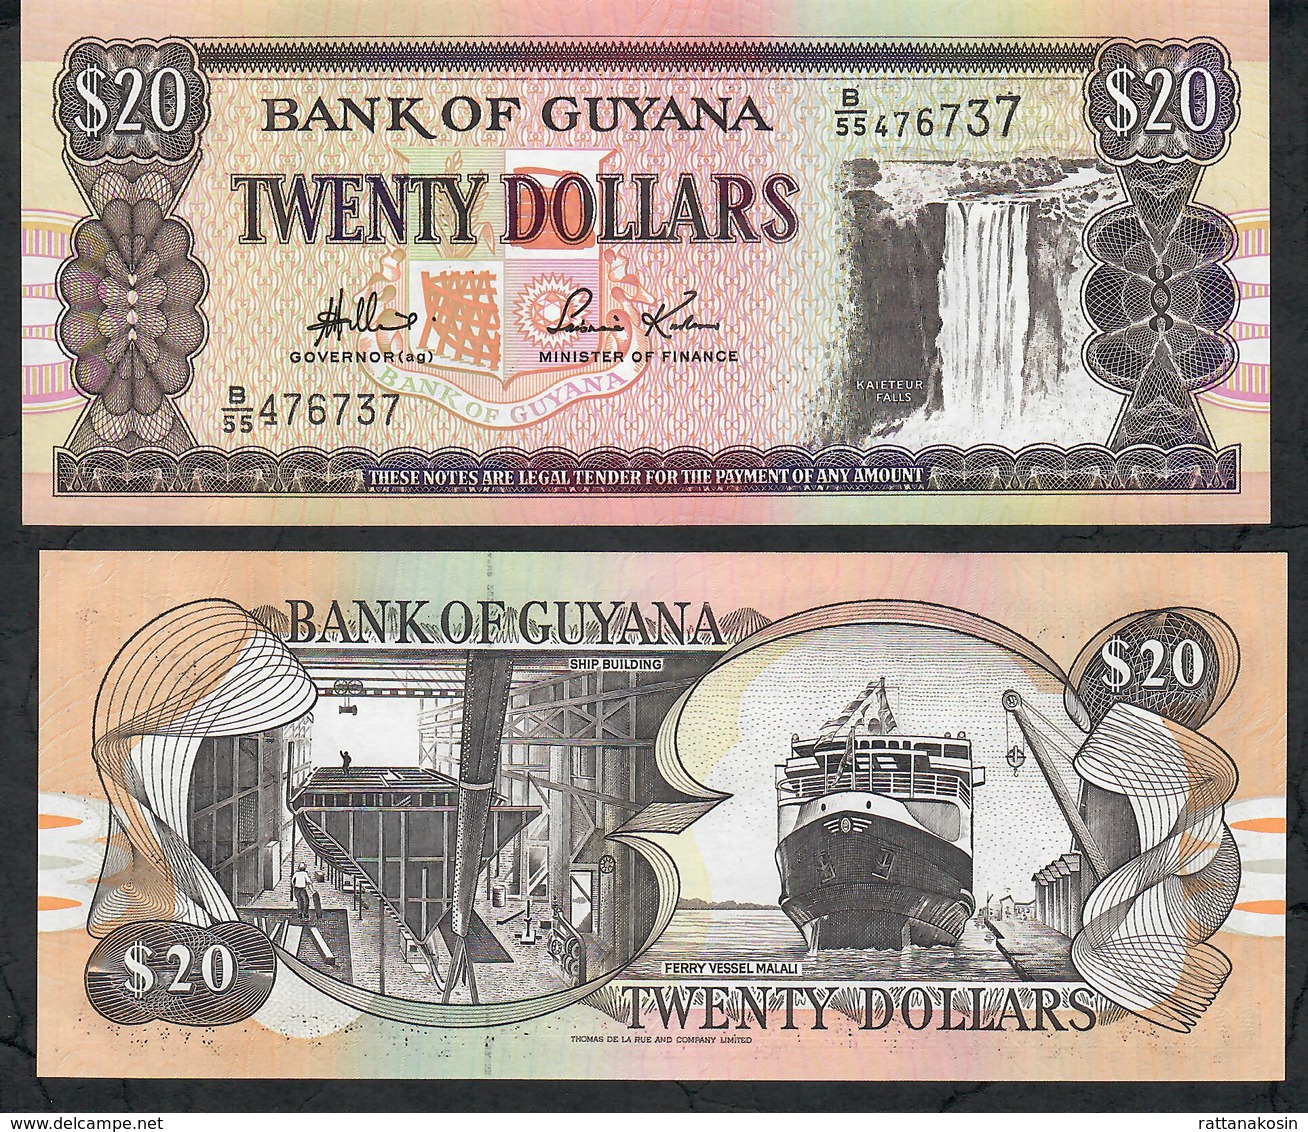 GUYANA P30d 20 DOLLARS 1996 #B/55 Signature 13 .Title :"GOVERNOR (ag) " UNC. - Guyana